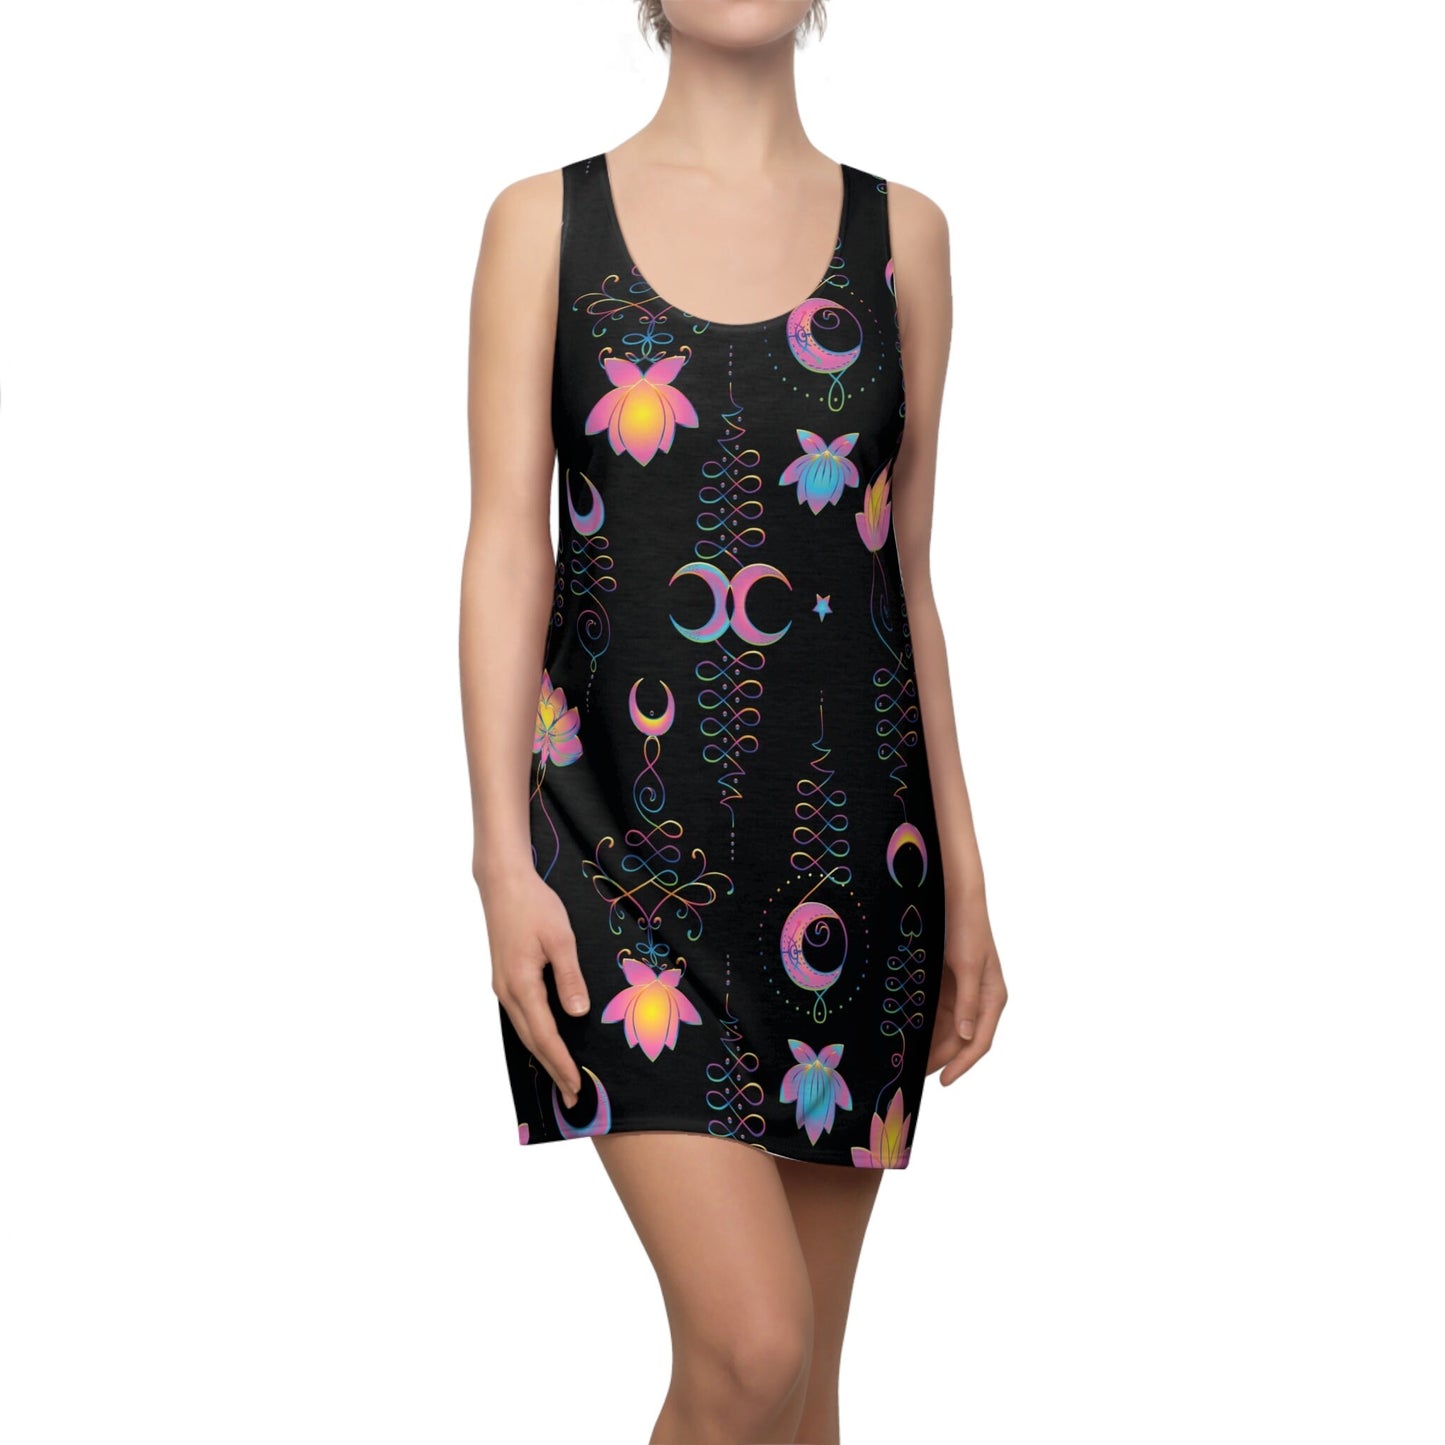 Unalome Lotus Flower Dress black pink sleeveless racerback dress